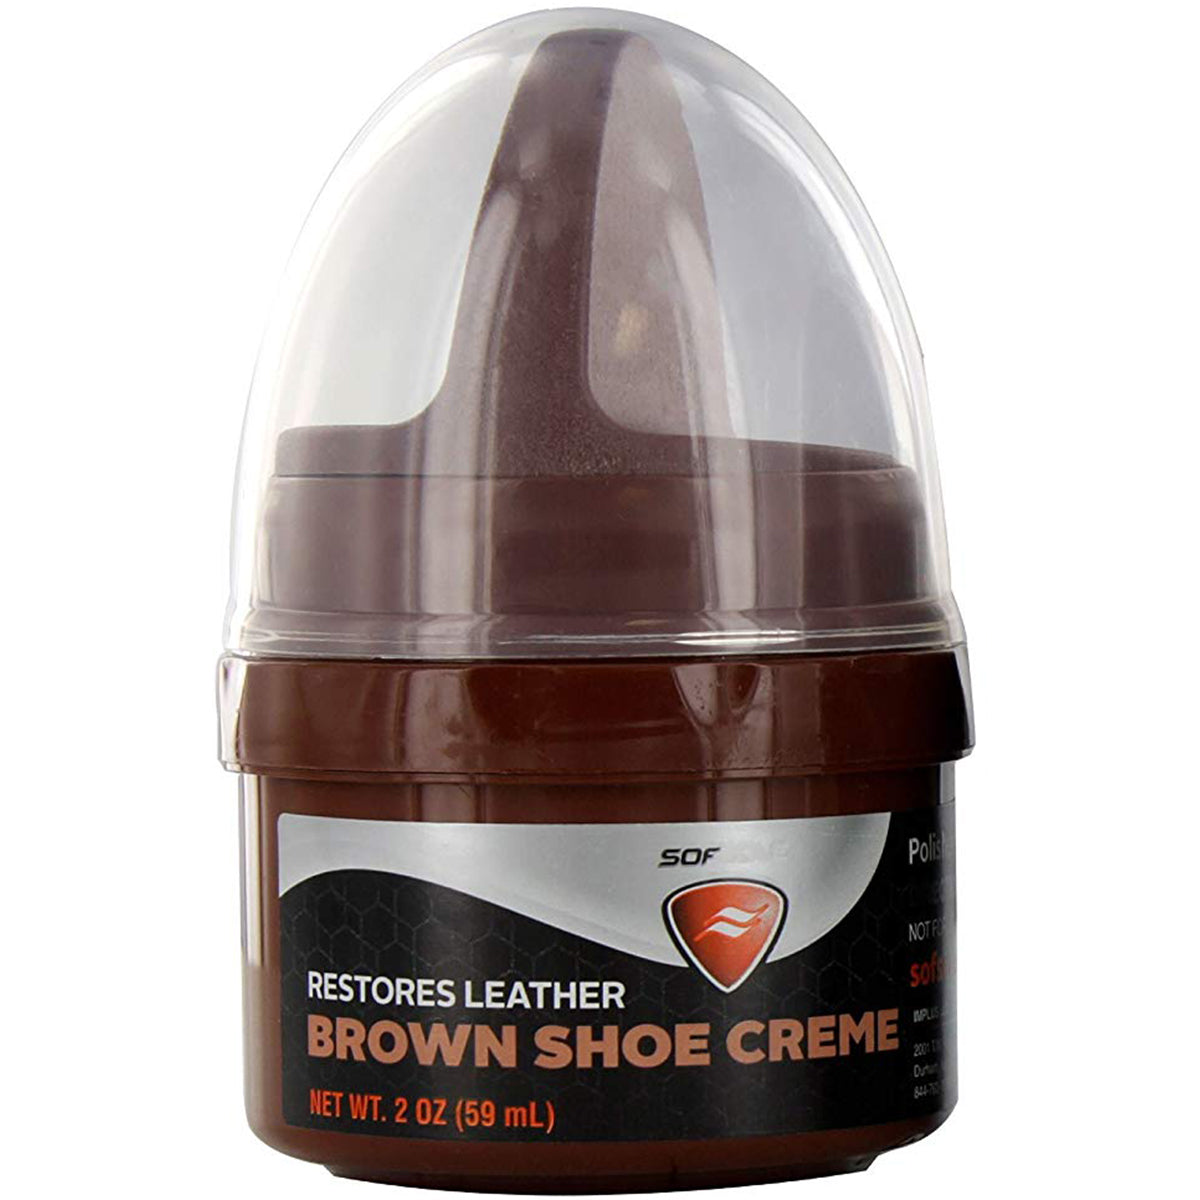 Sof Sole 2 oz. Leather Restoration Shoe Creme SofSole